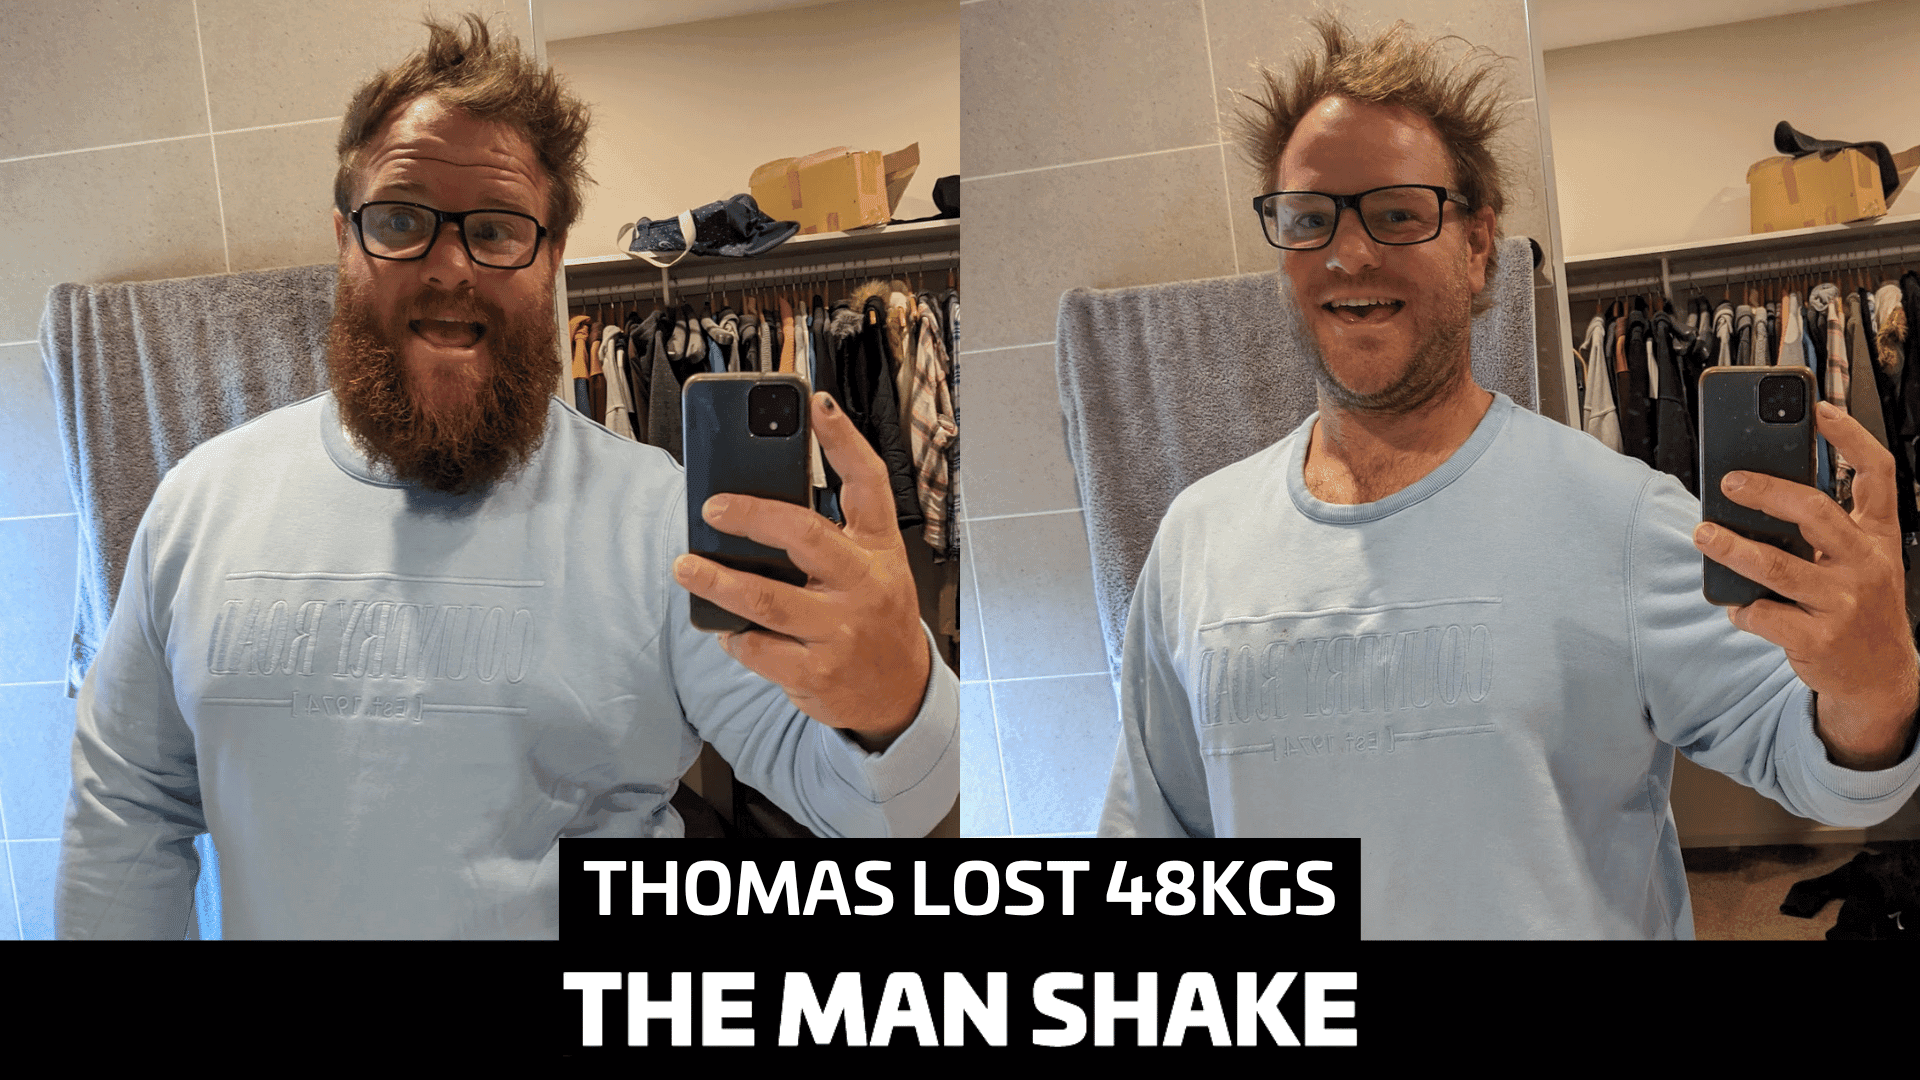 Thomas was always the "big guy" until he lost 48kg!